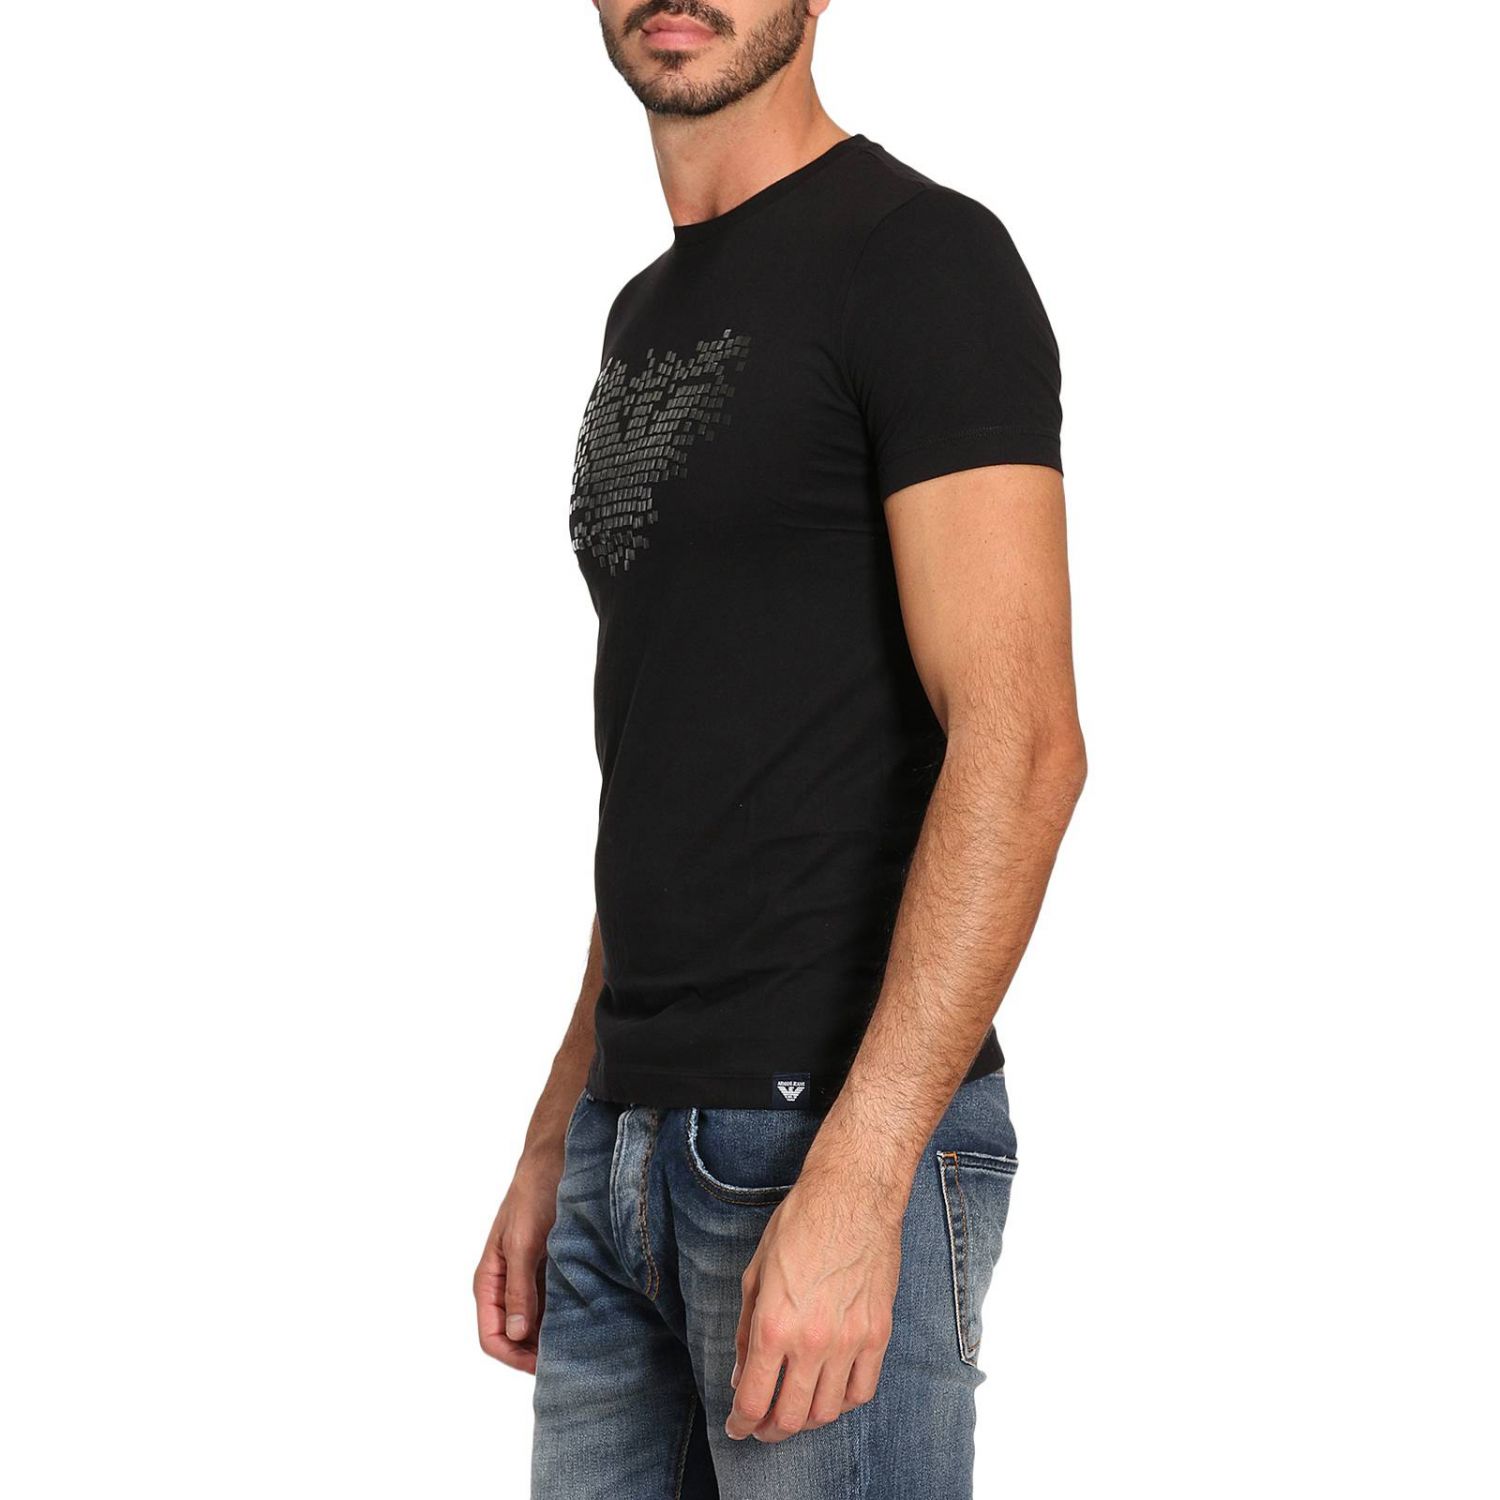 armani jeans black shirt